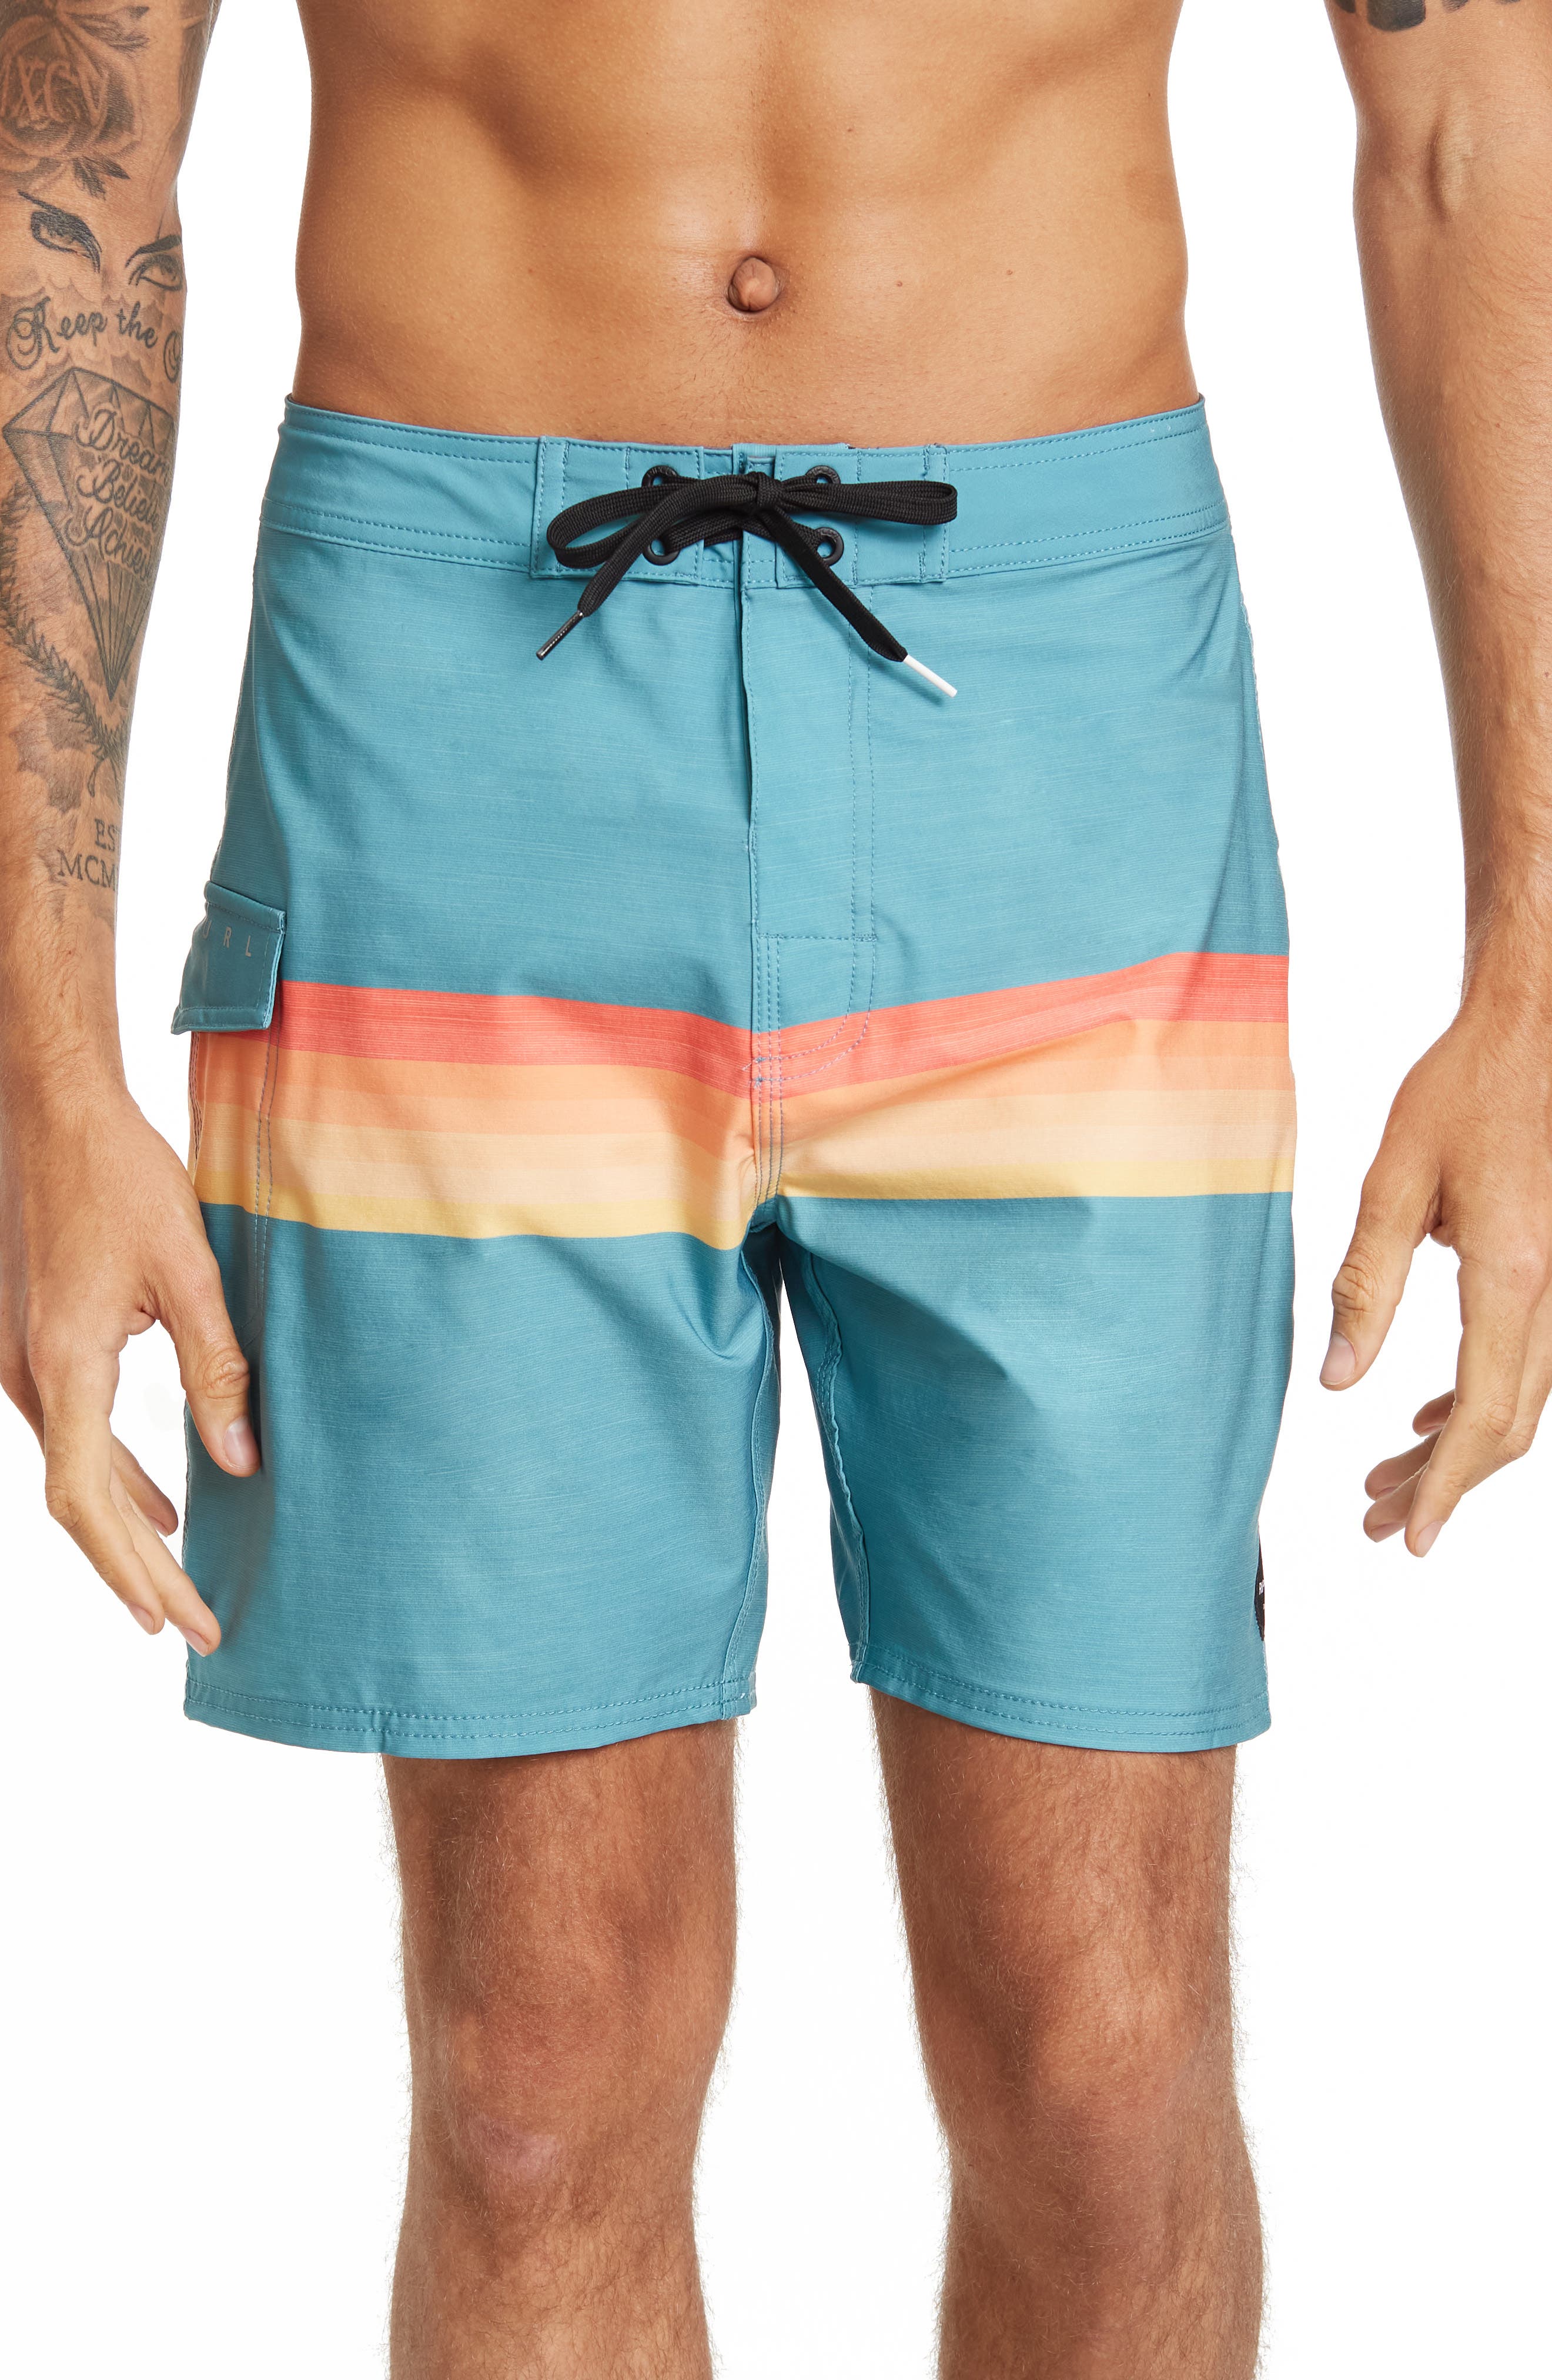 Mens Beach Swim Trunks Vintage Poppy Flowers Boxer Swimsuit Underwear Board Shorts with Pocket